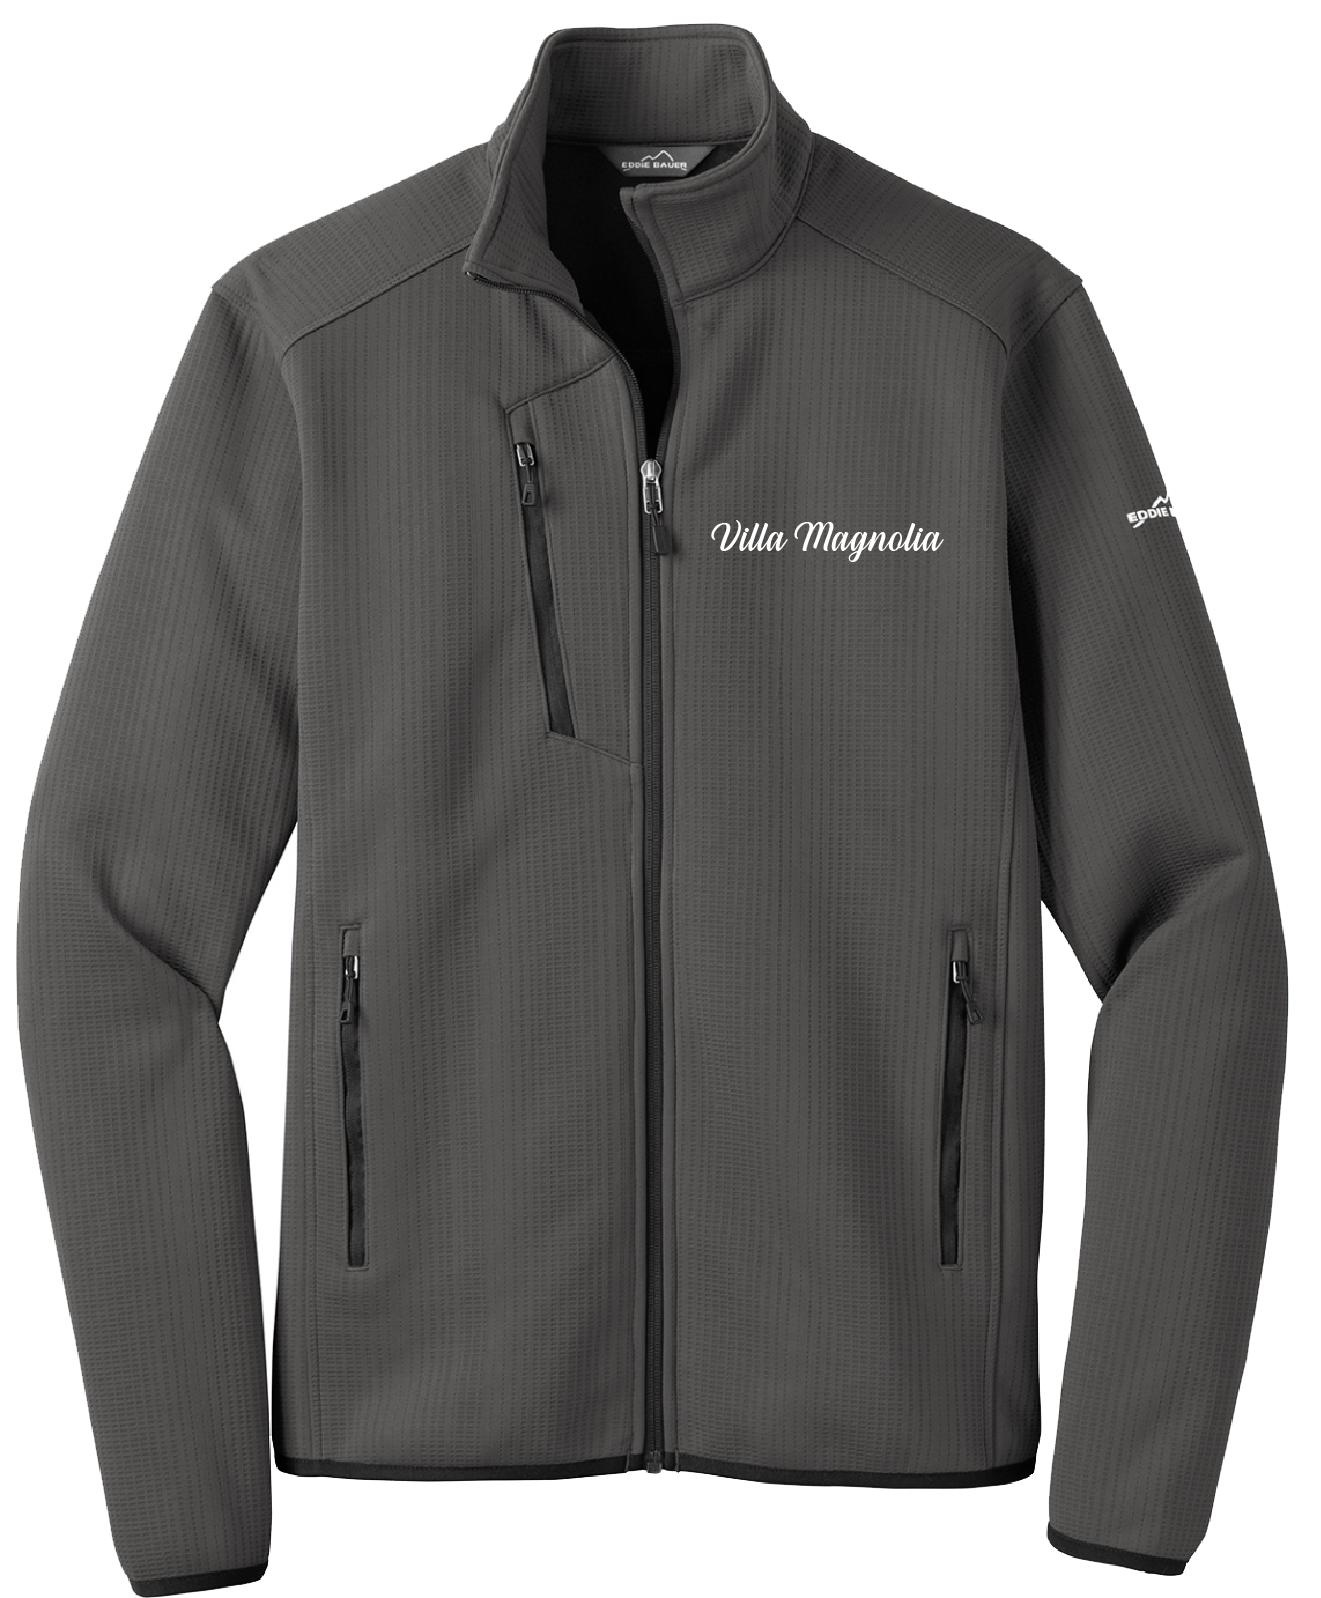 Villa Magnolia - Mens - Eddie Bauer ® Dash Full-Zip Fleece Jacket